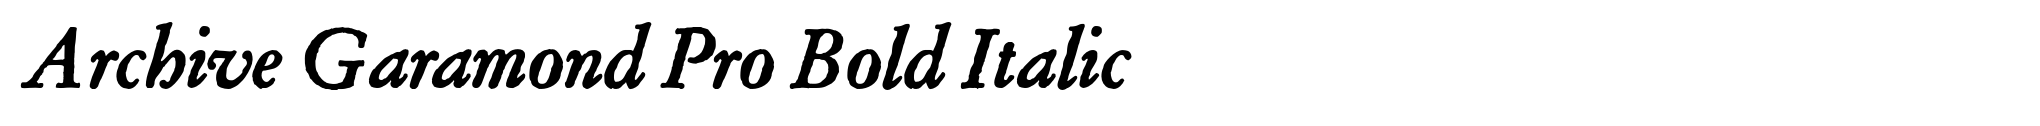 Archive Garamond Pro Bold Italic image